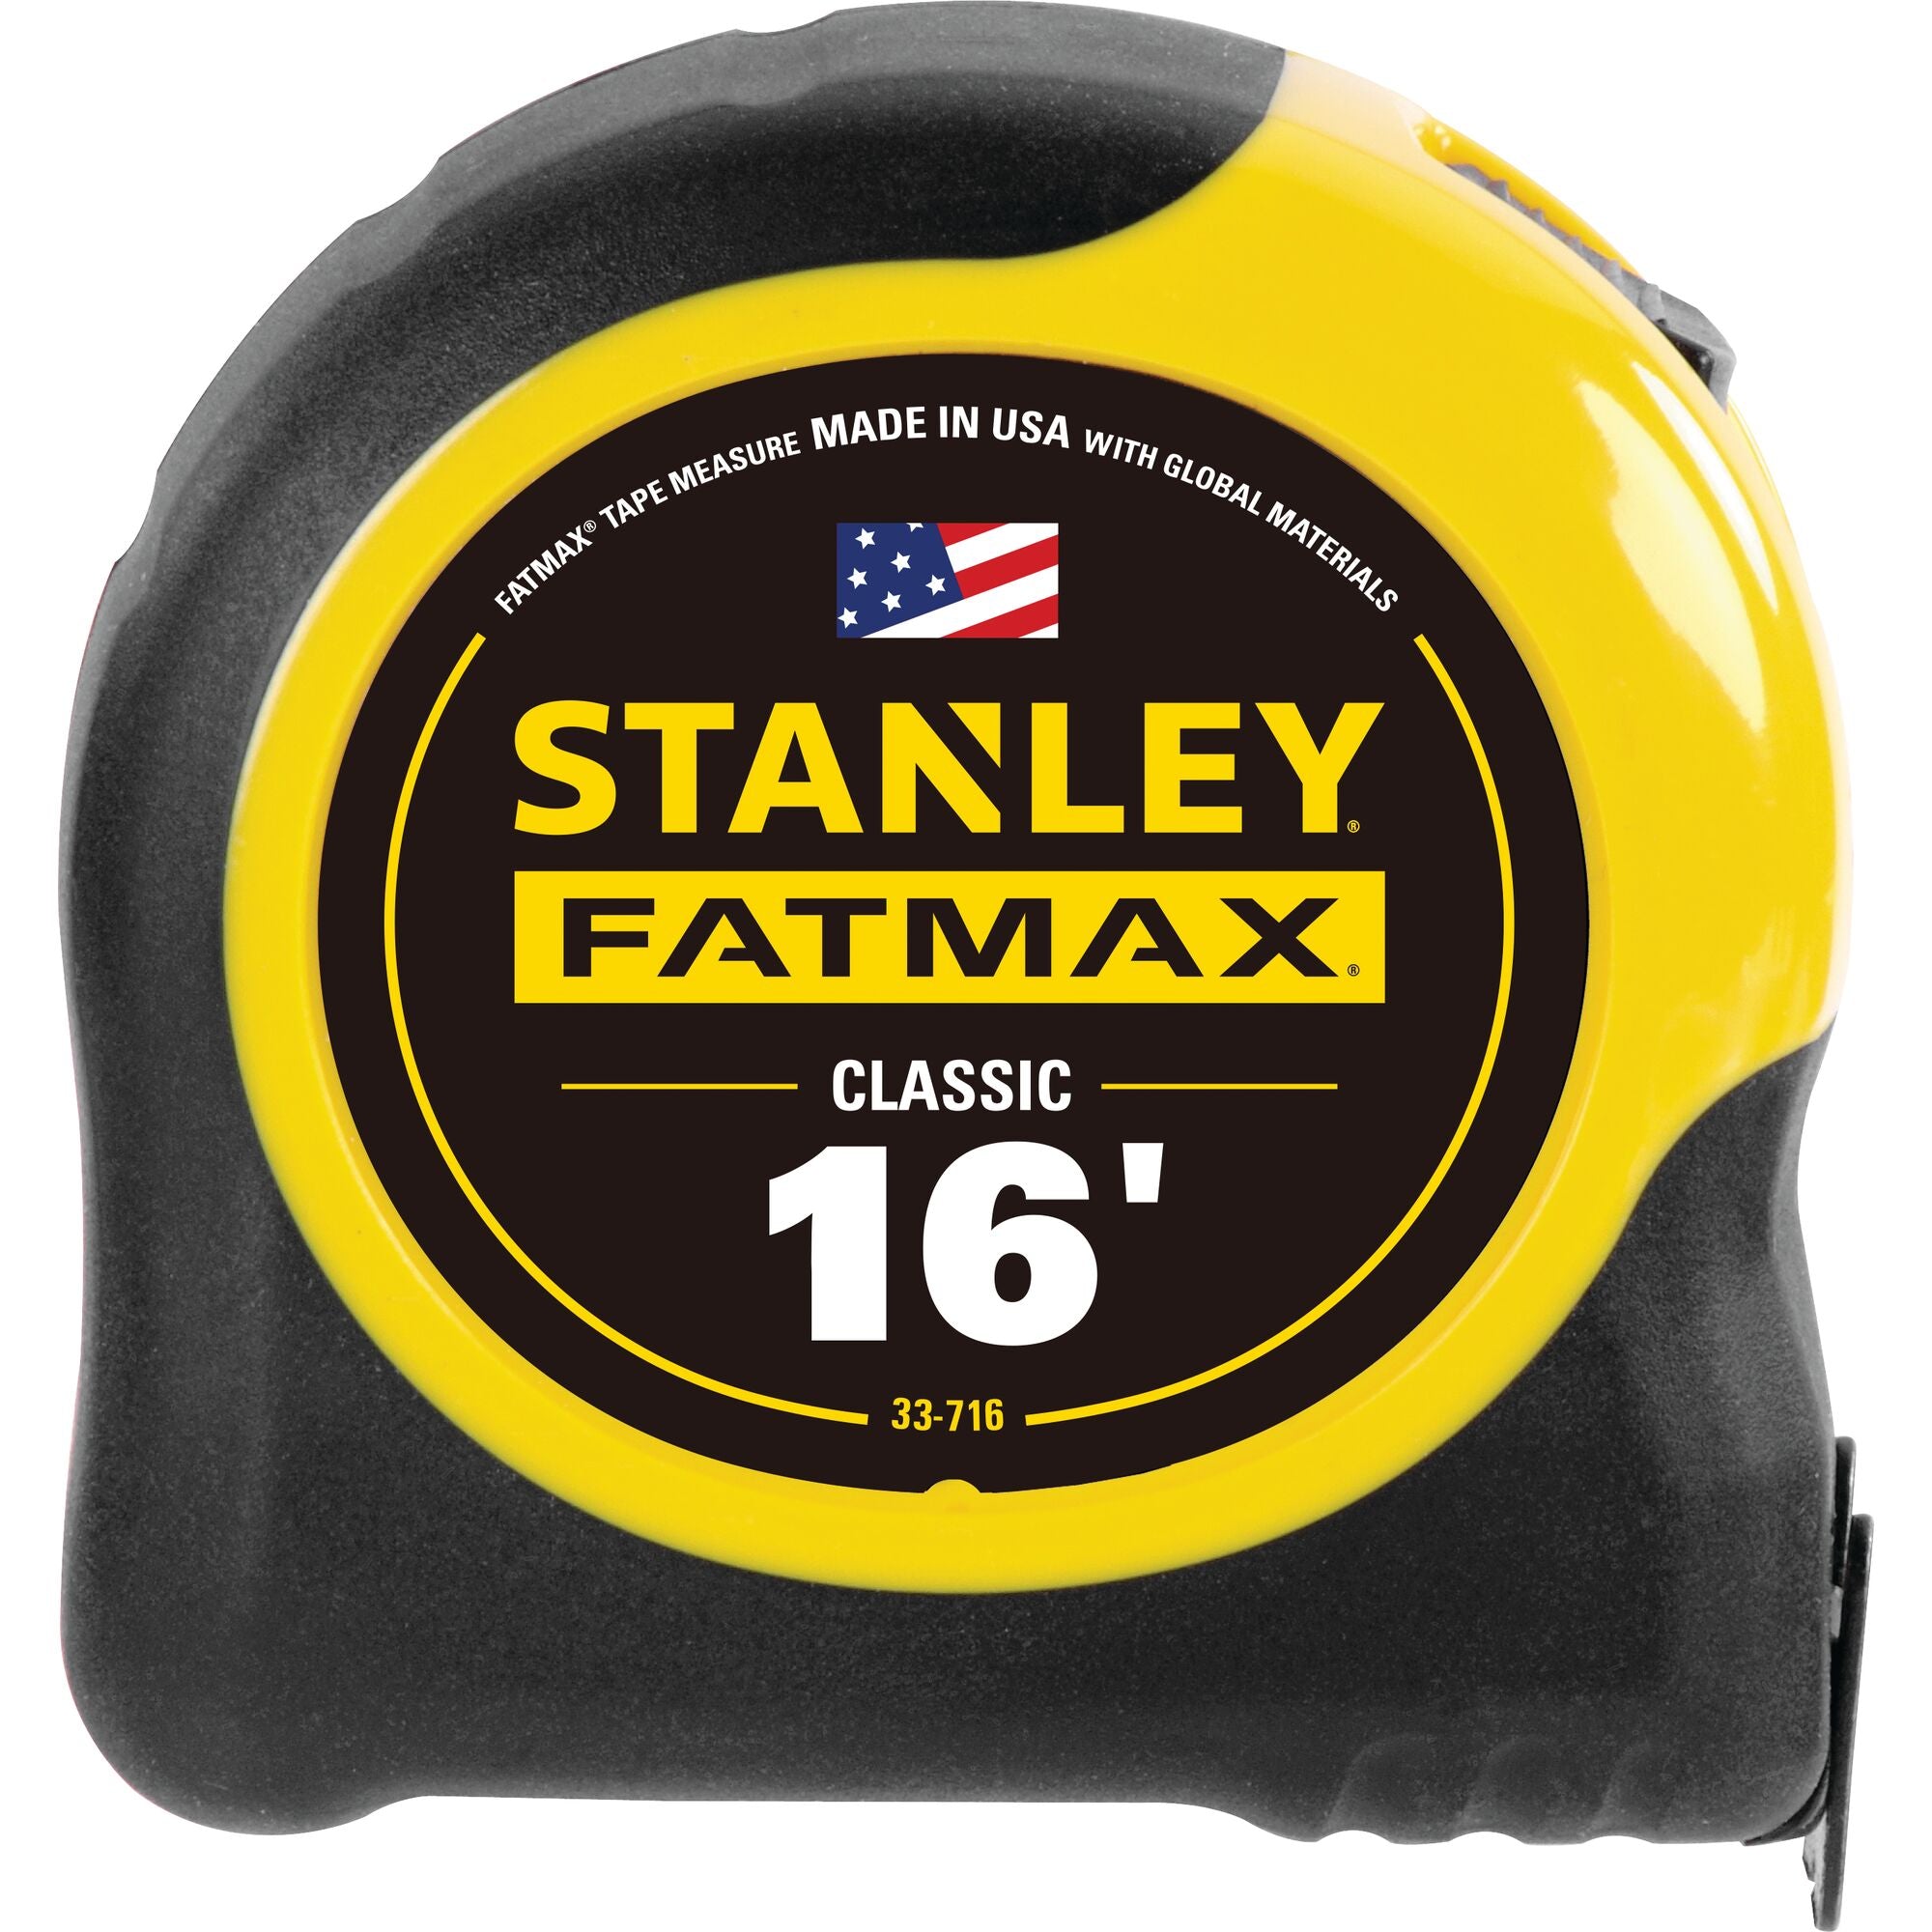 1-1/4"x16' Fatmax Tape Measure